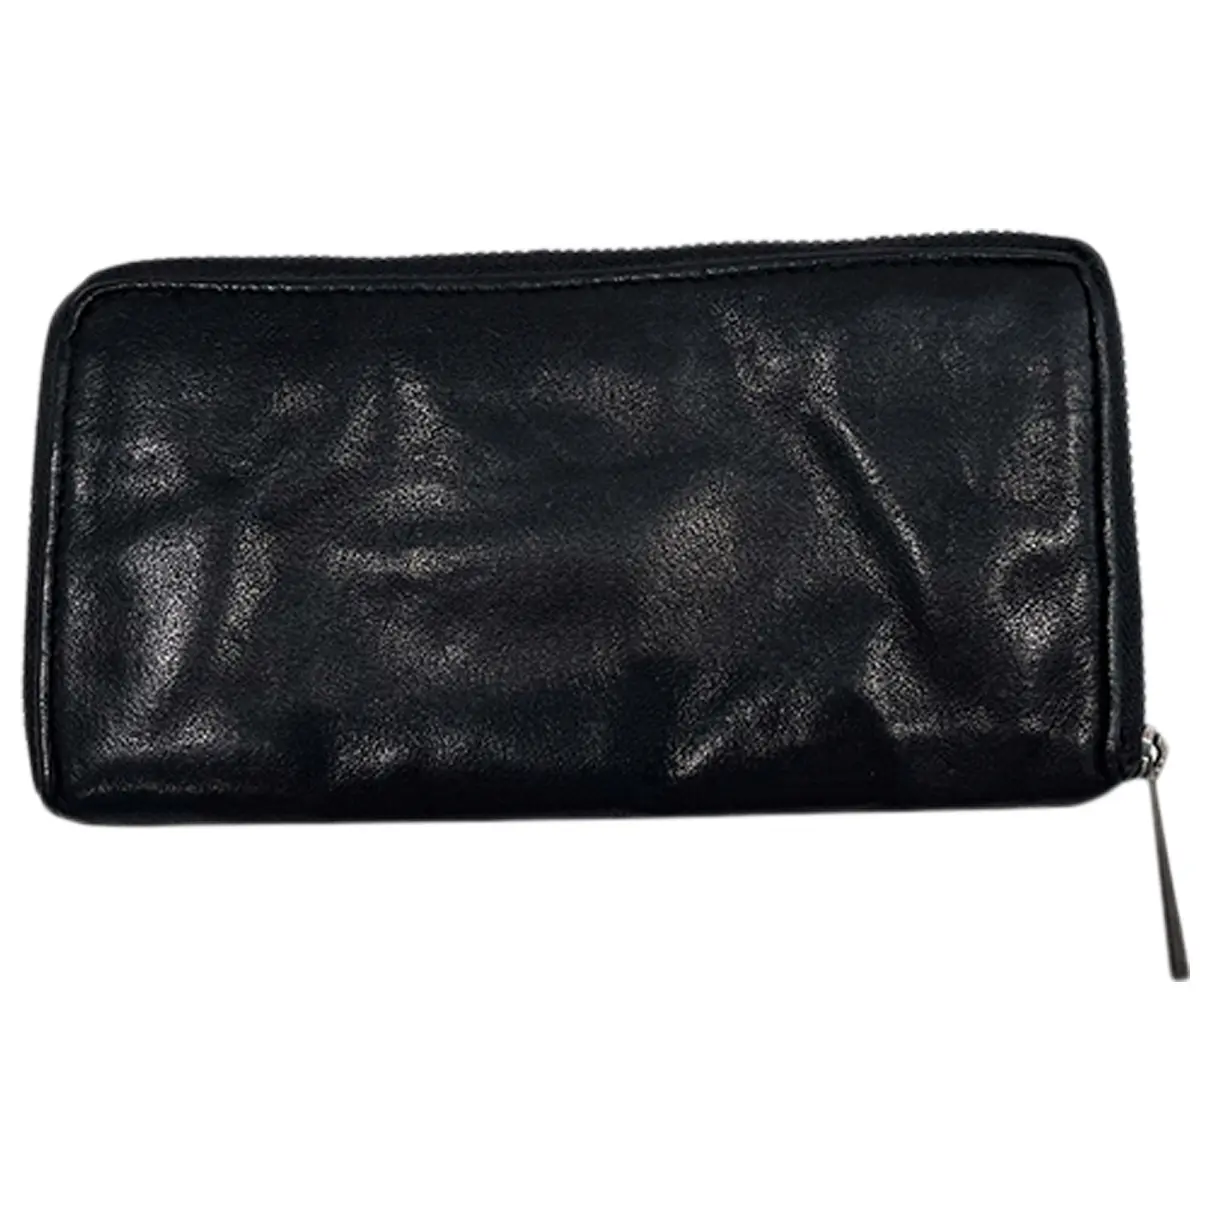 Leather wallet Núnoo